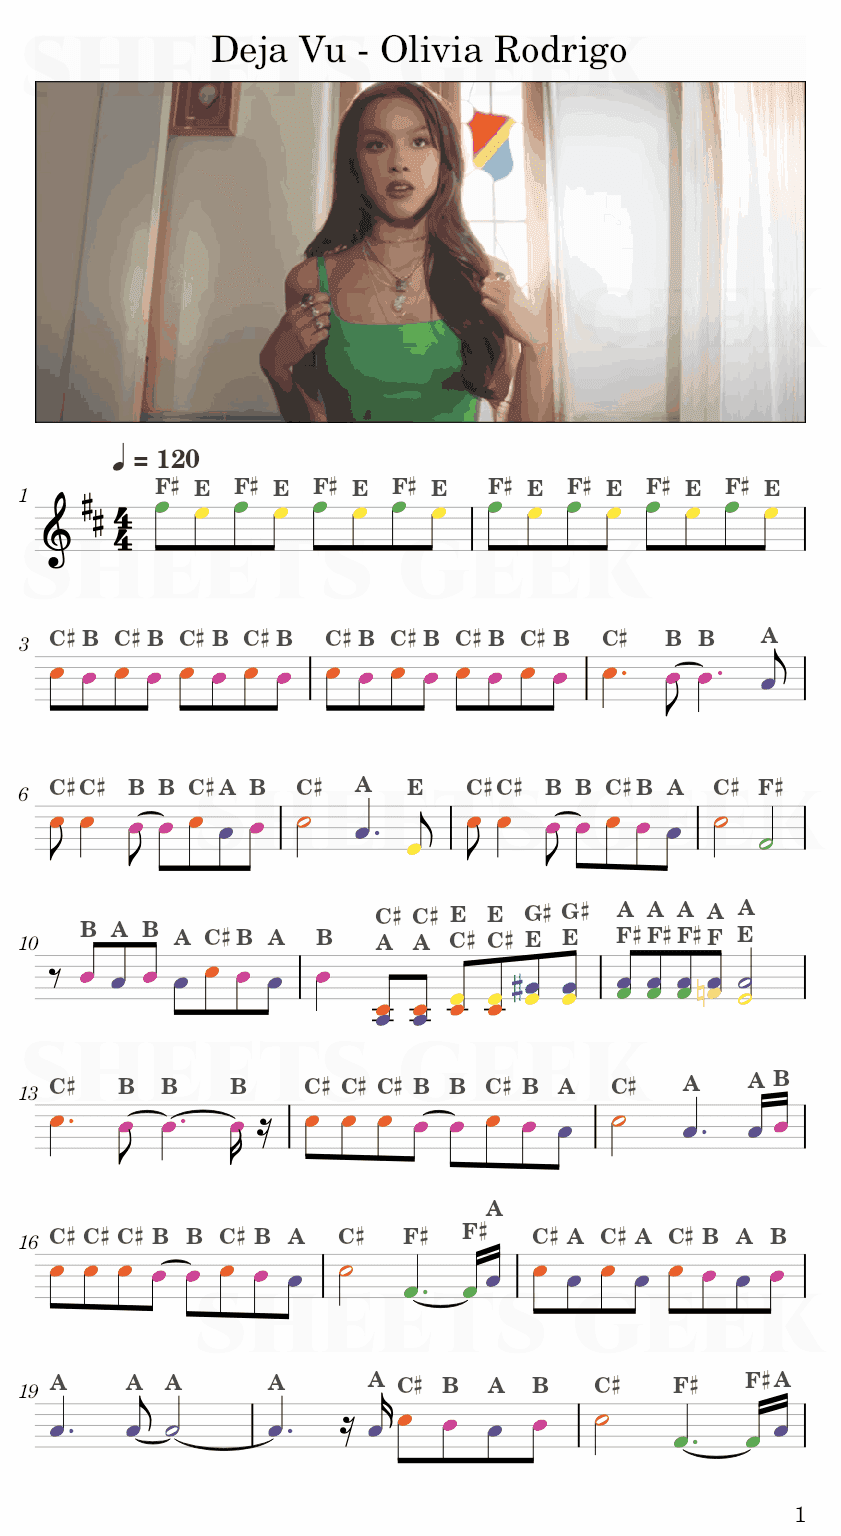 Deja Vu - Olivia Rodrigo Easy Sheet Music Free for piano, keyboard, flute, violin, sax, cello page 1